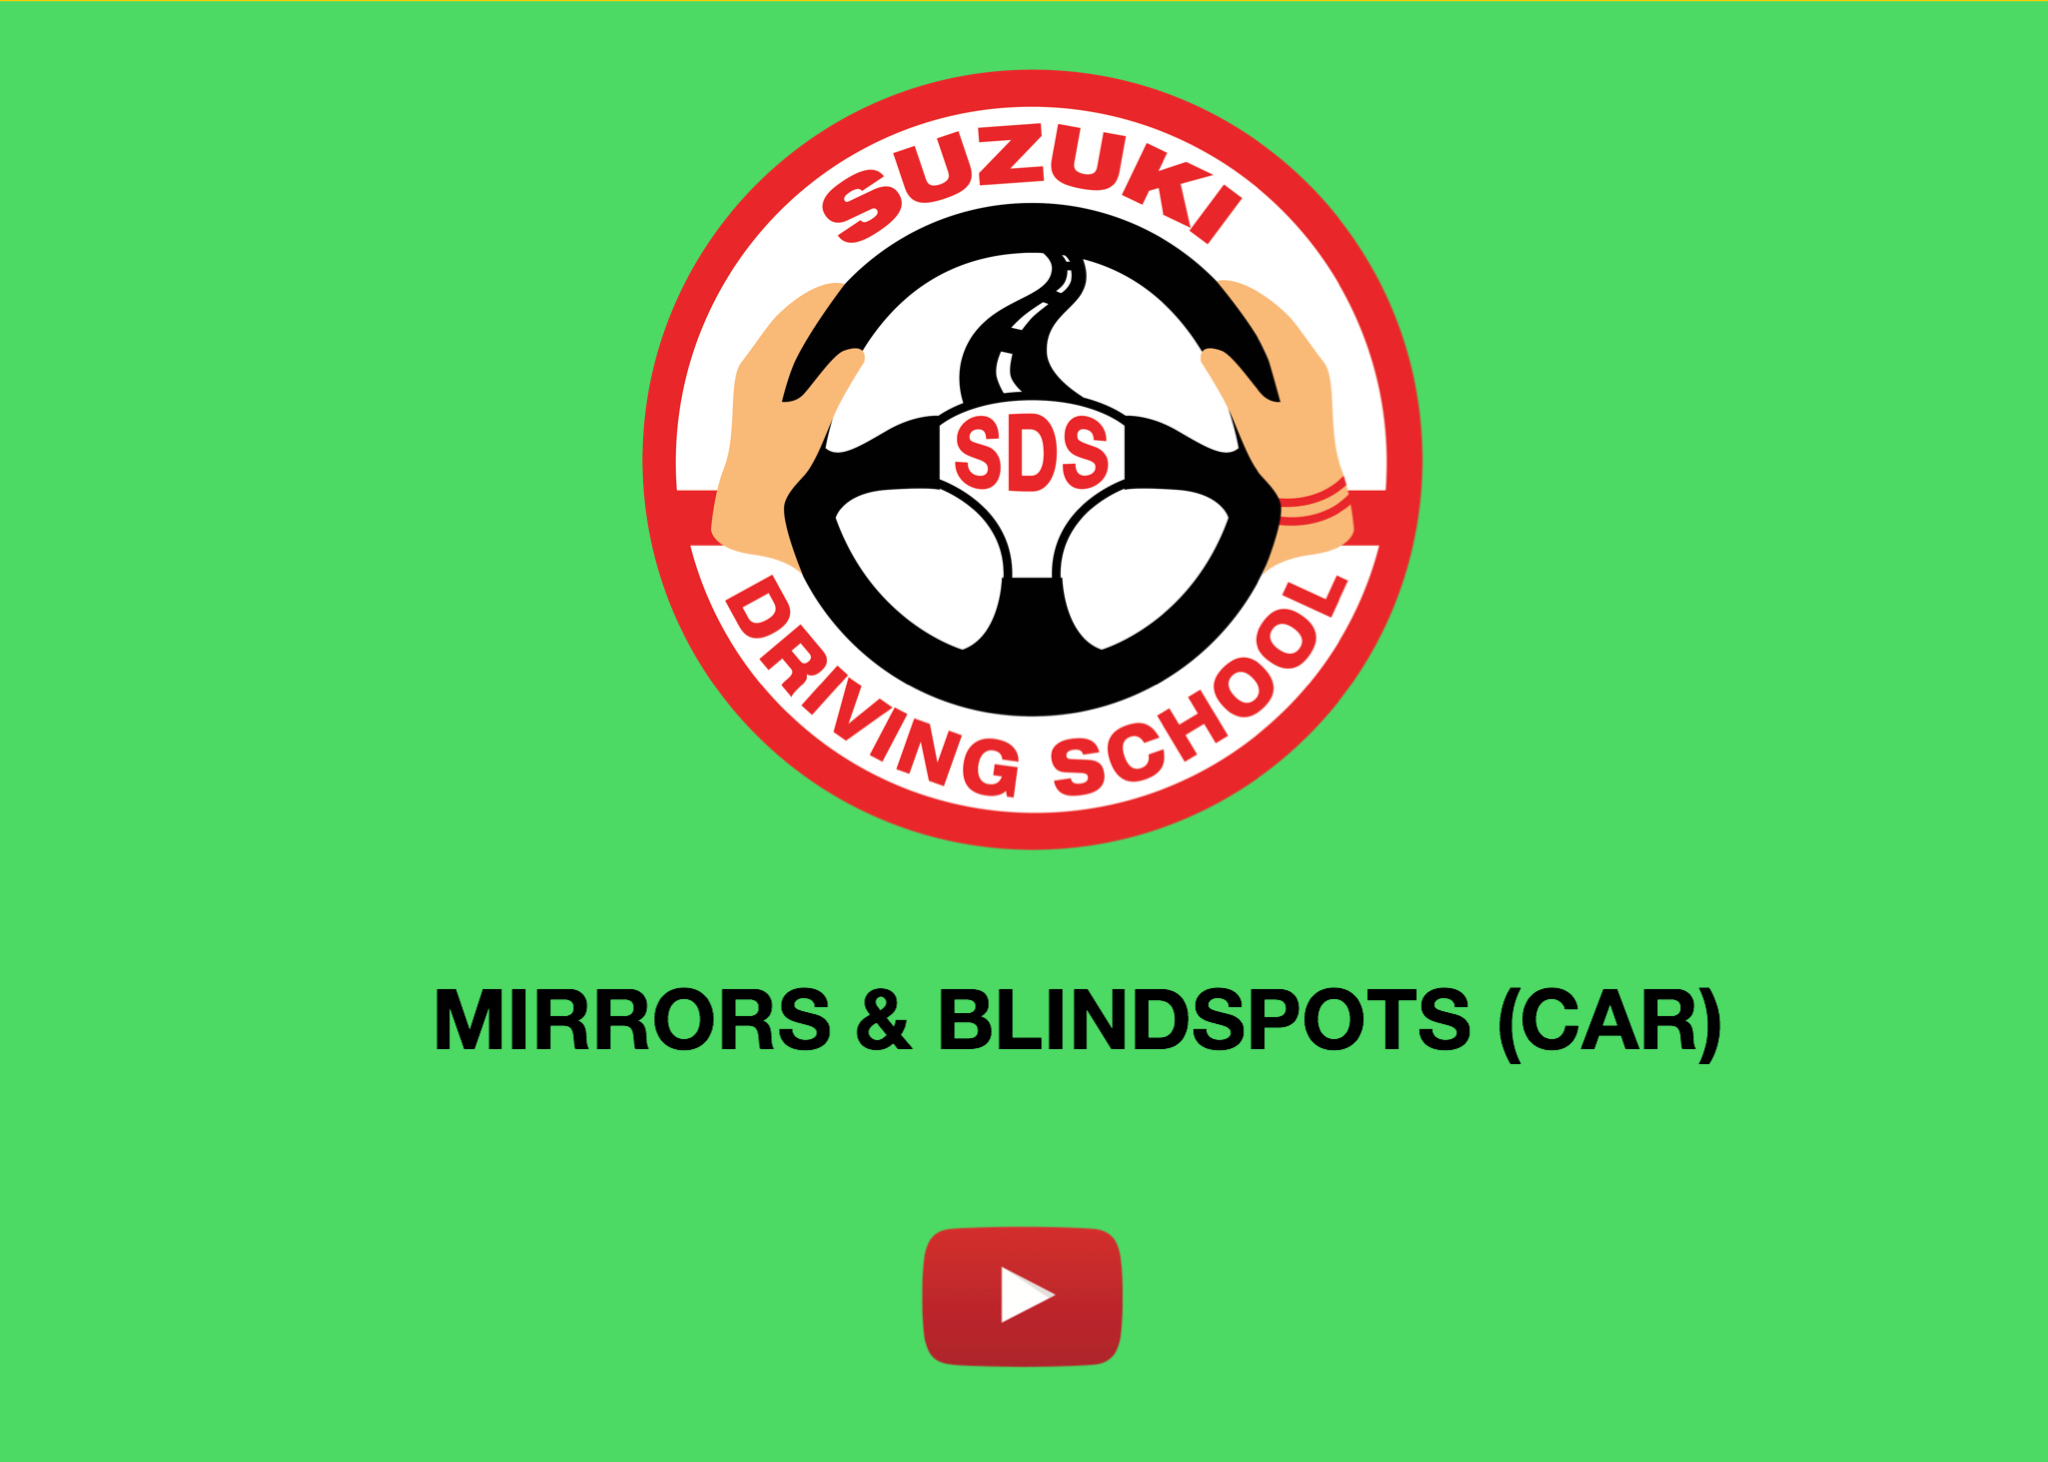 Mirror & Blinds Spots